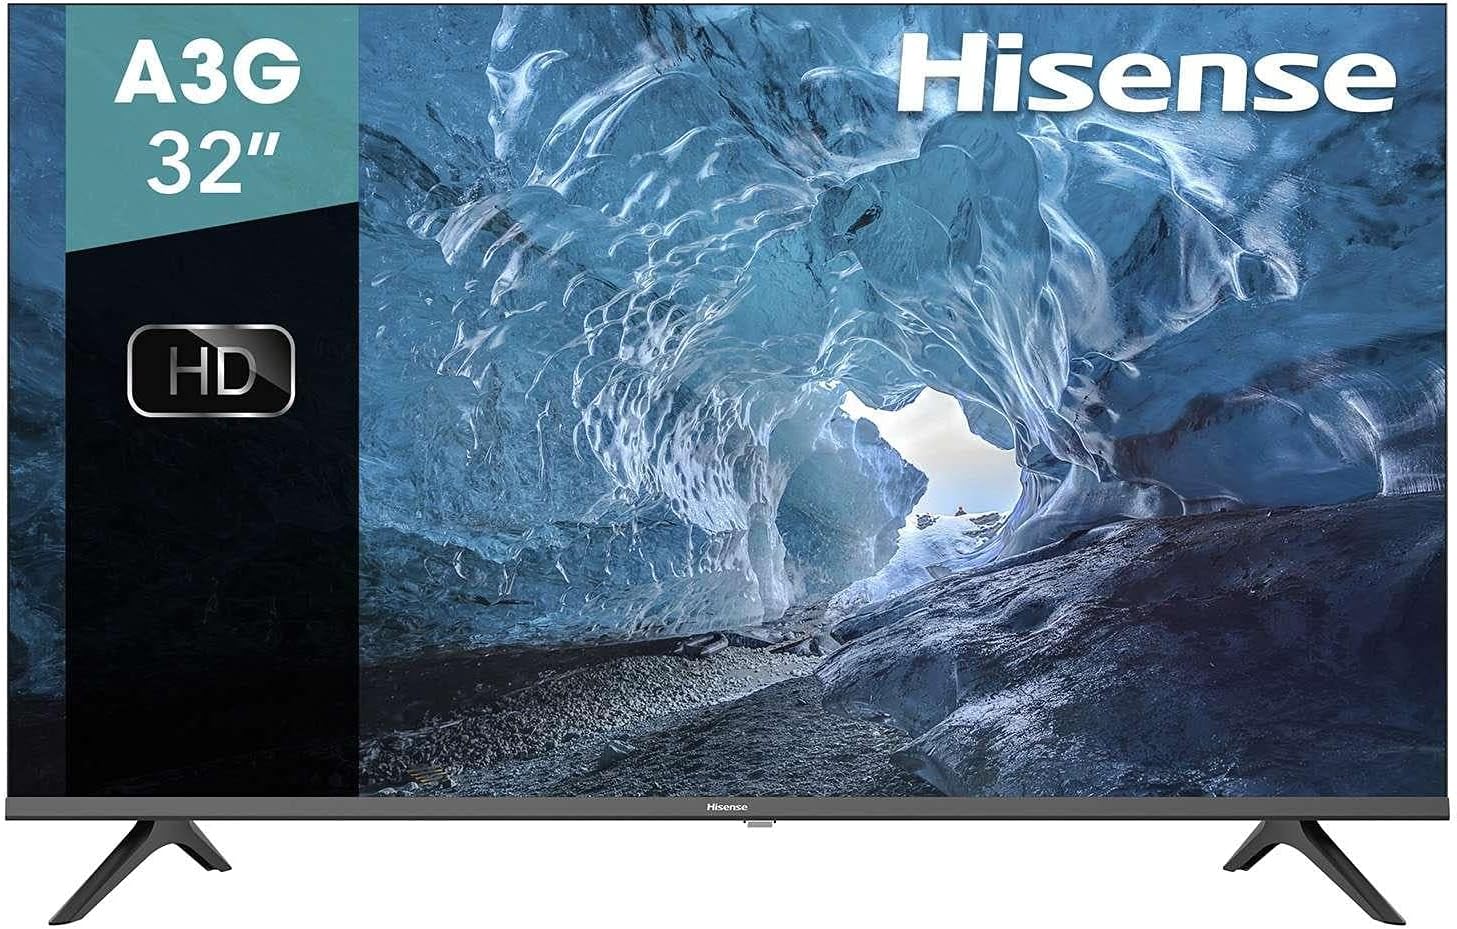 HISENSE TV 32 PULGADAS A3G BASICA HD LED HD LED 32A3G